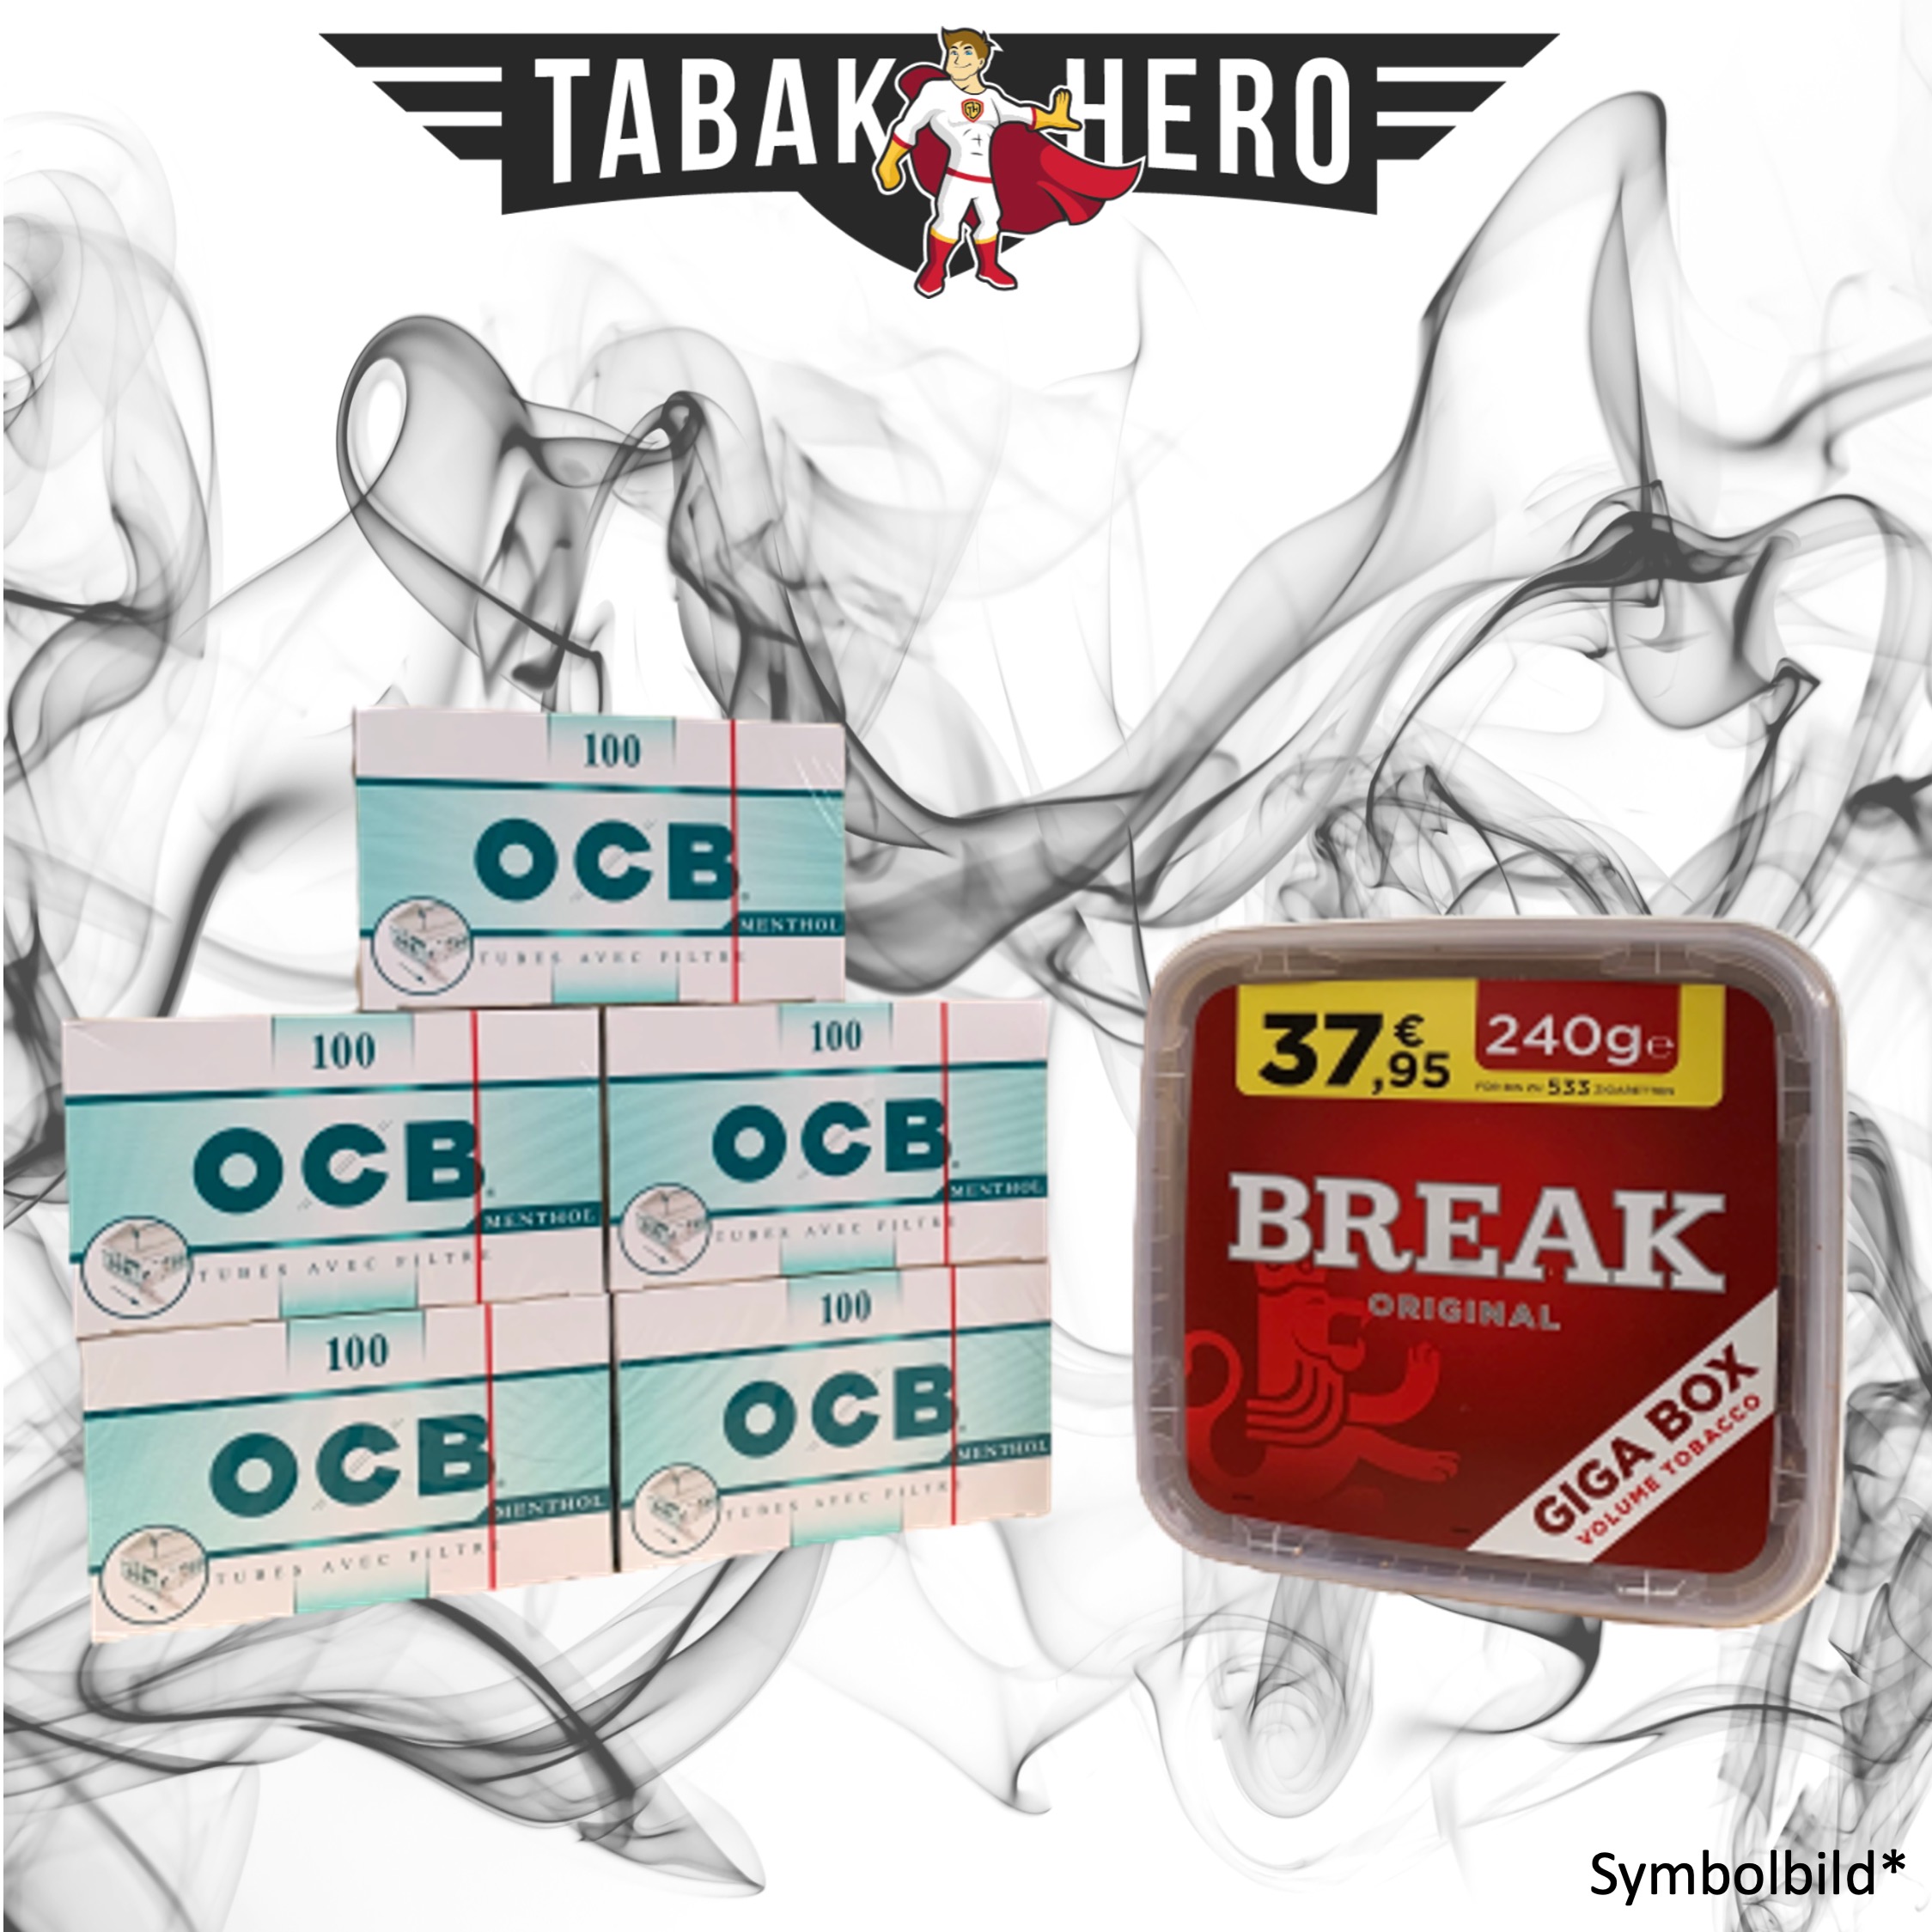 230g Break Original Tabak, OCB Menthol-Filterhülsen Stopftabak Volumentabak